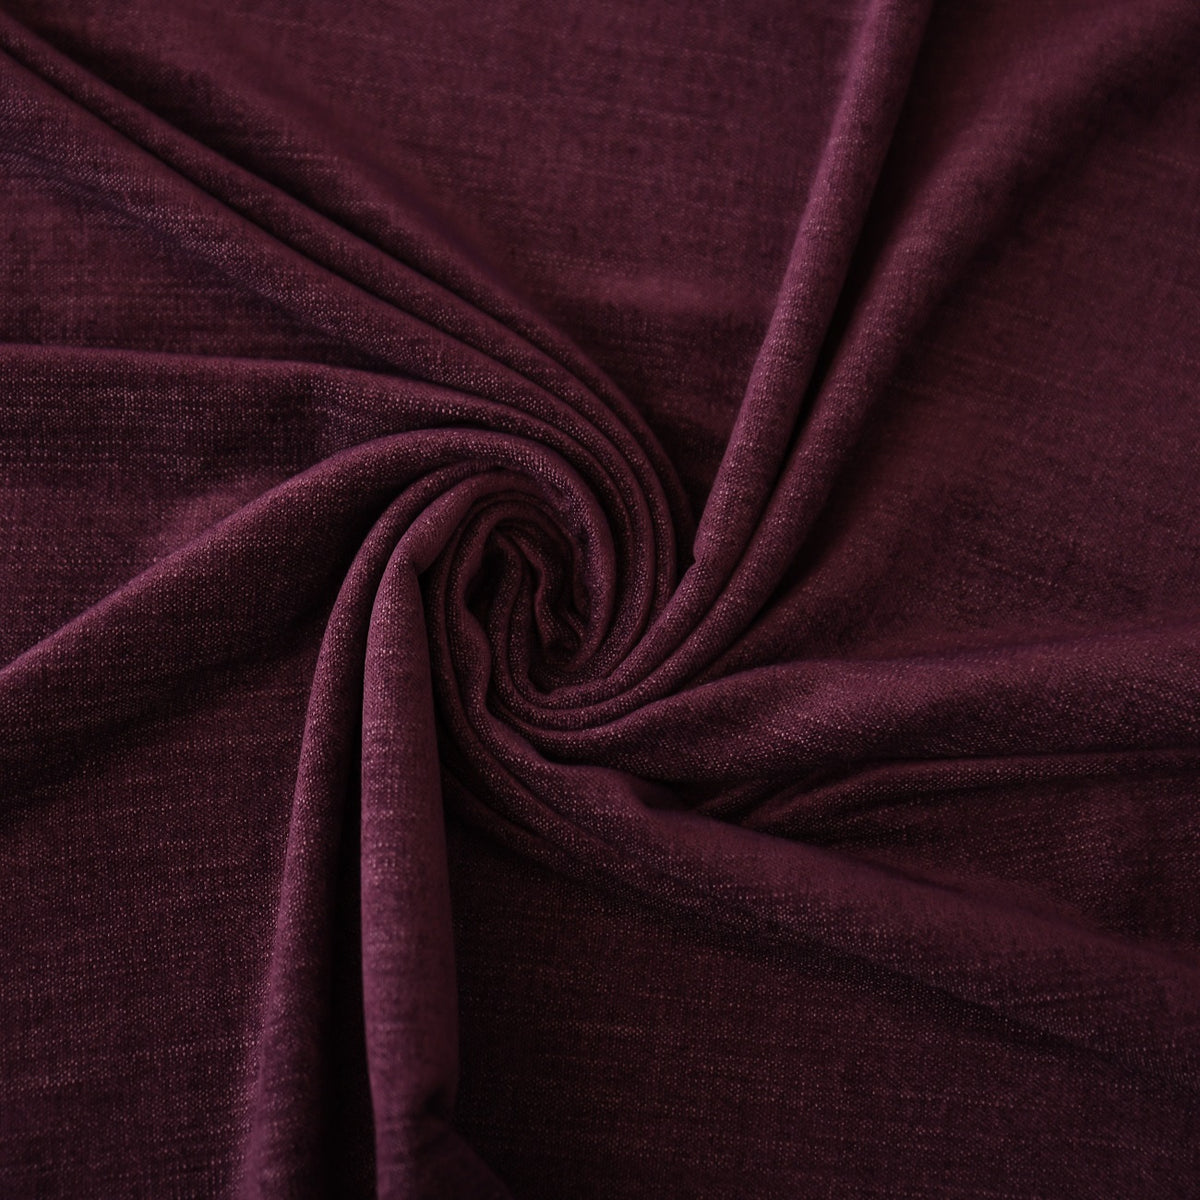 Night curtain purple Yeti